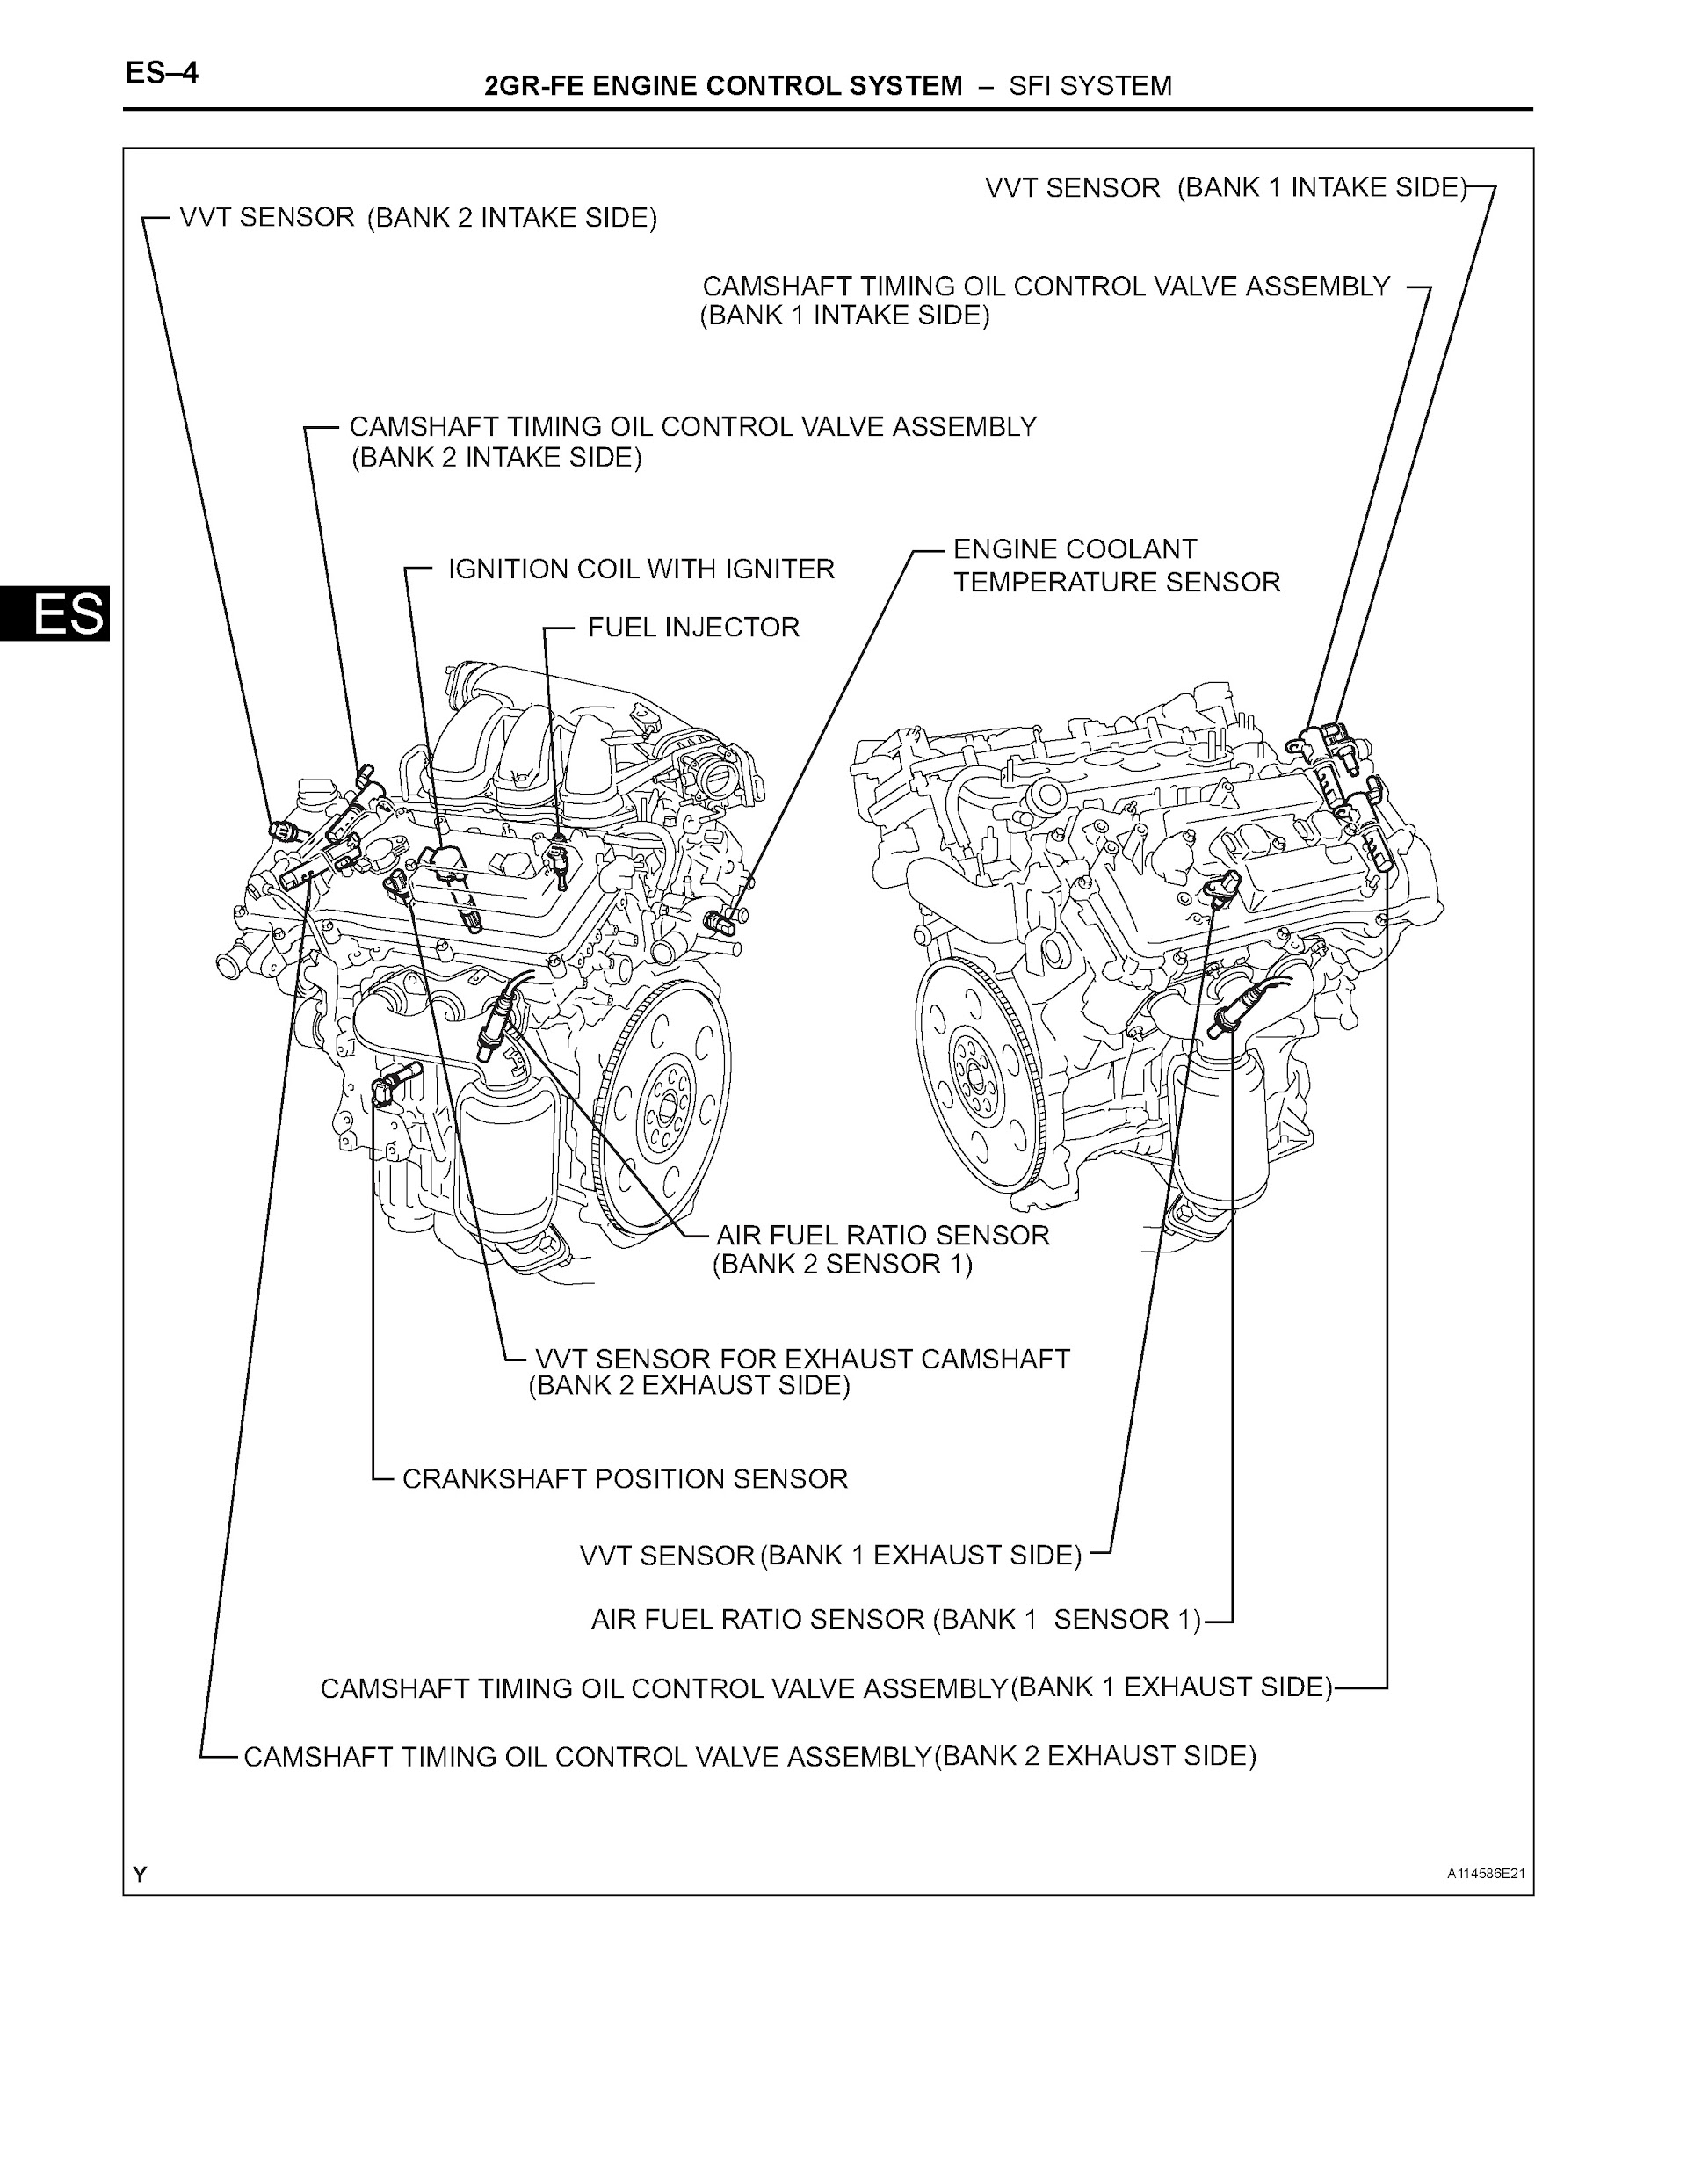 2007 Toyota Sienna Repair Manual, SFI System